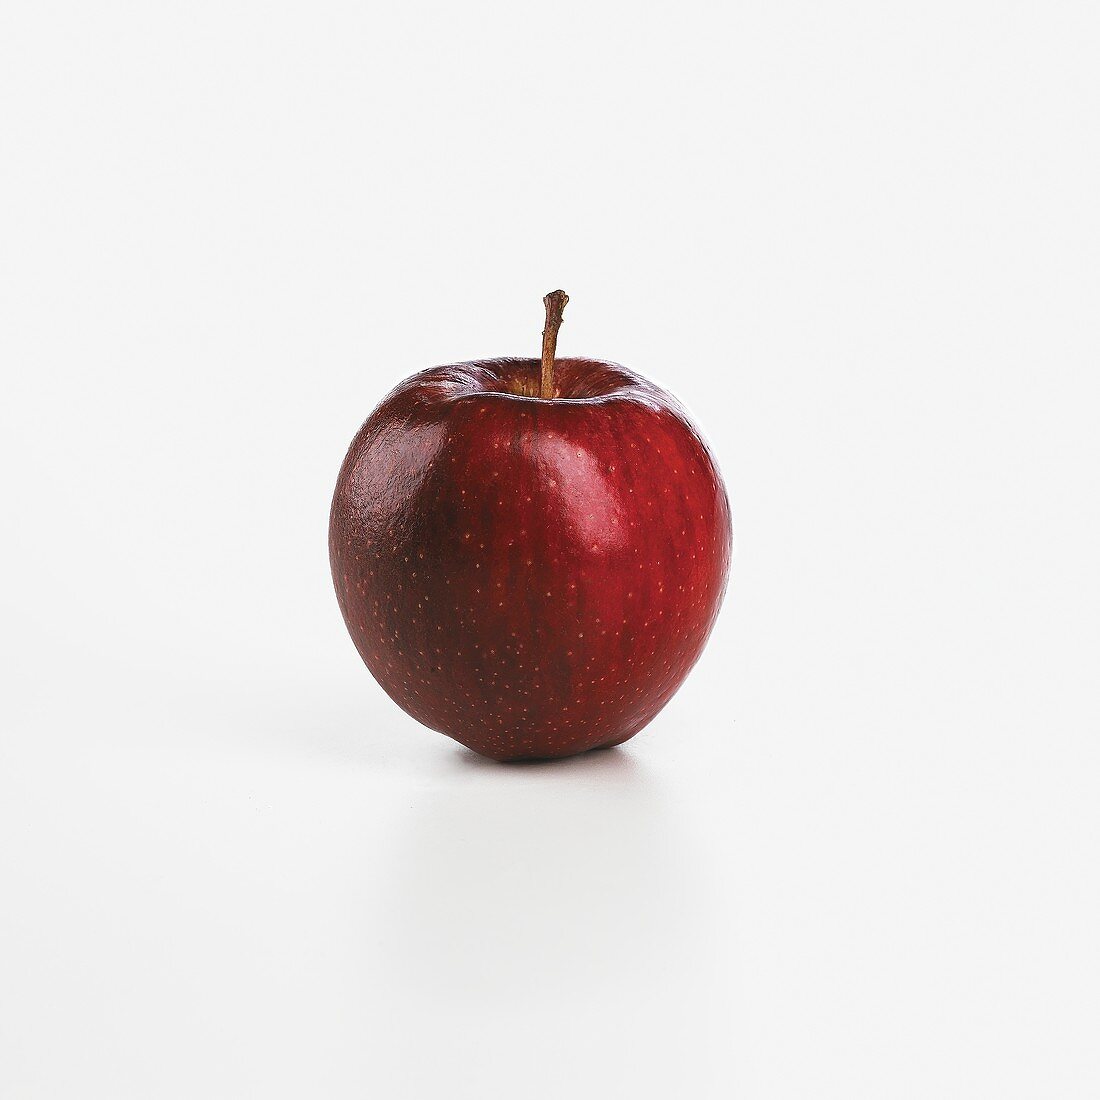 A Macintosh Apple